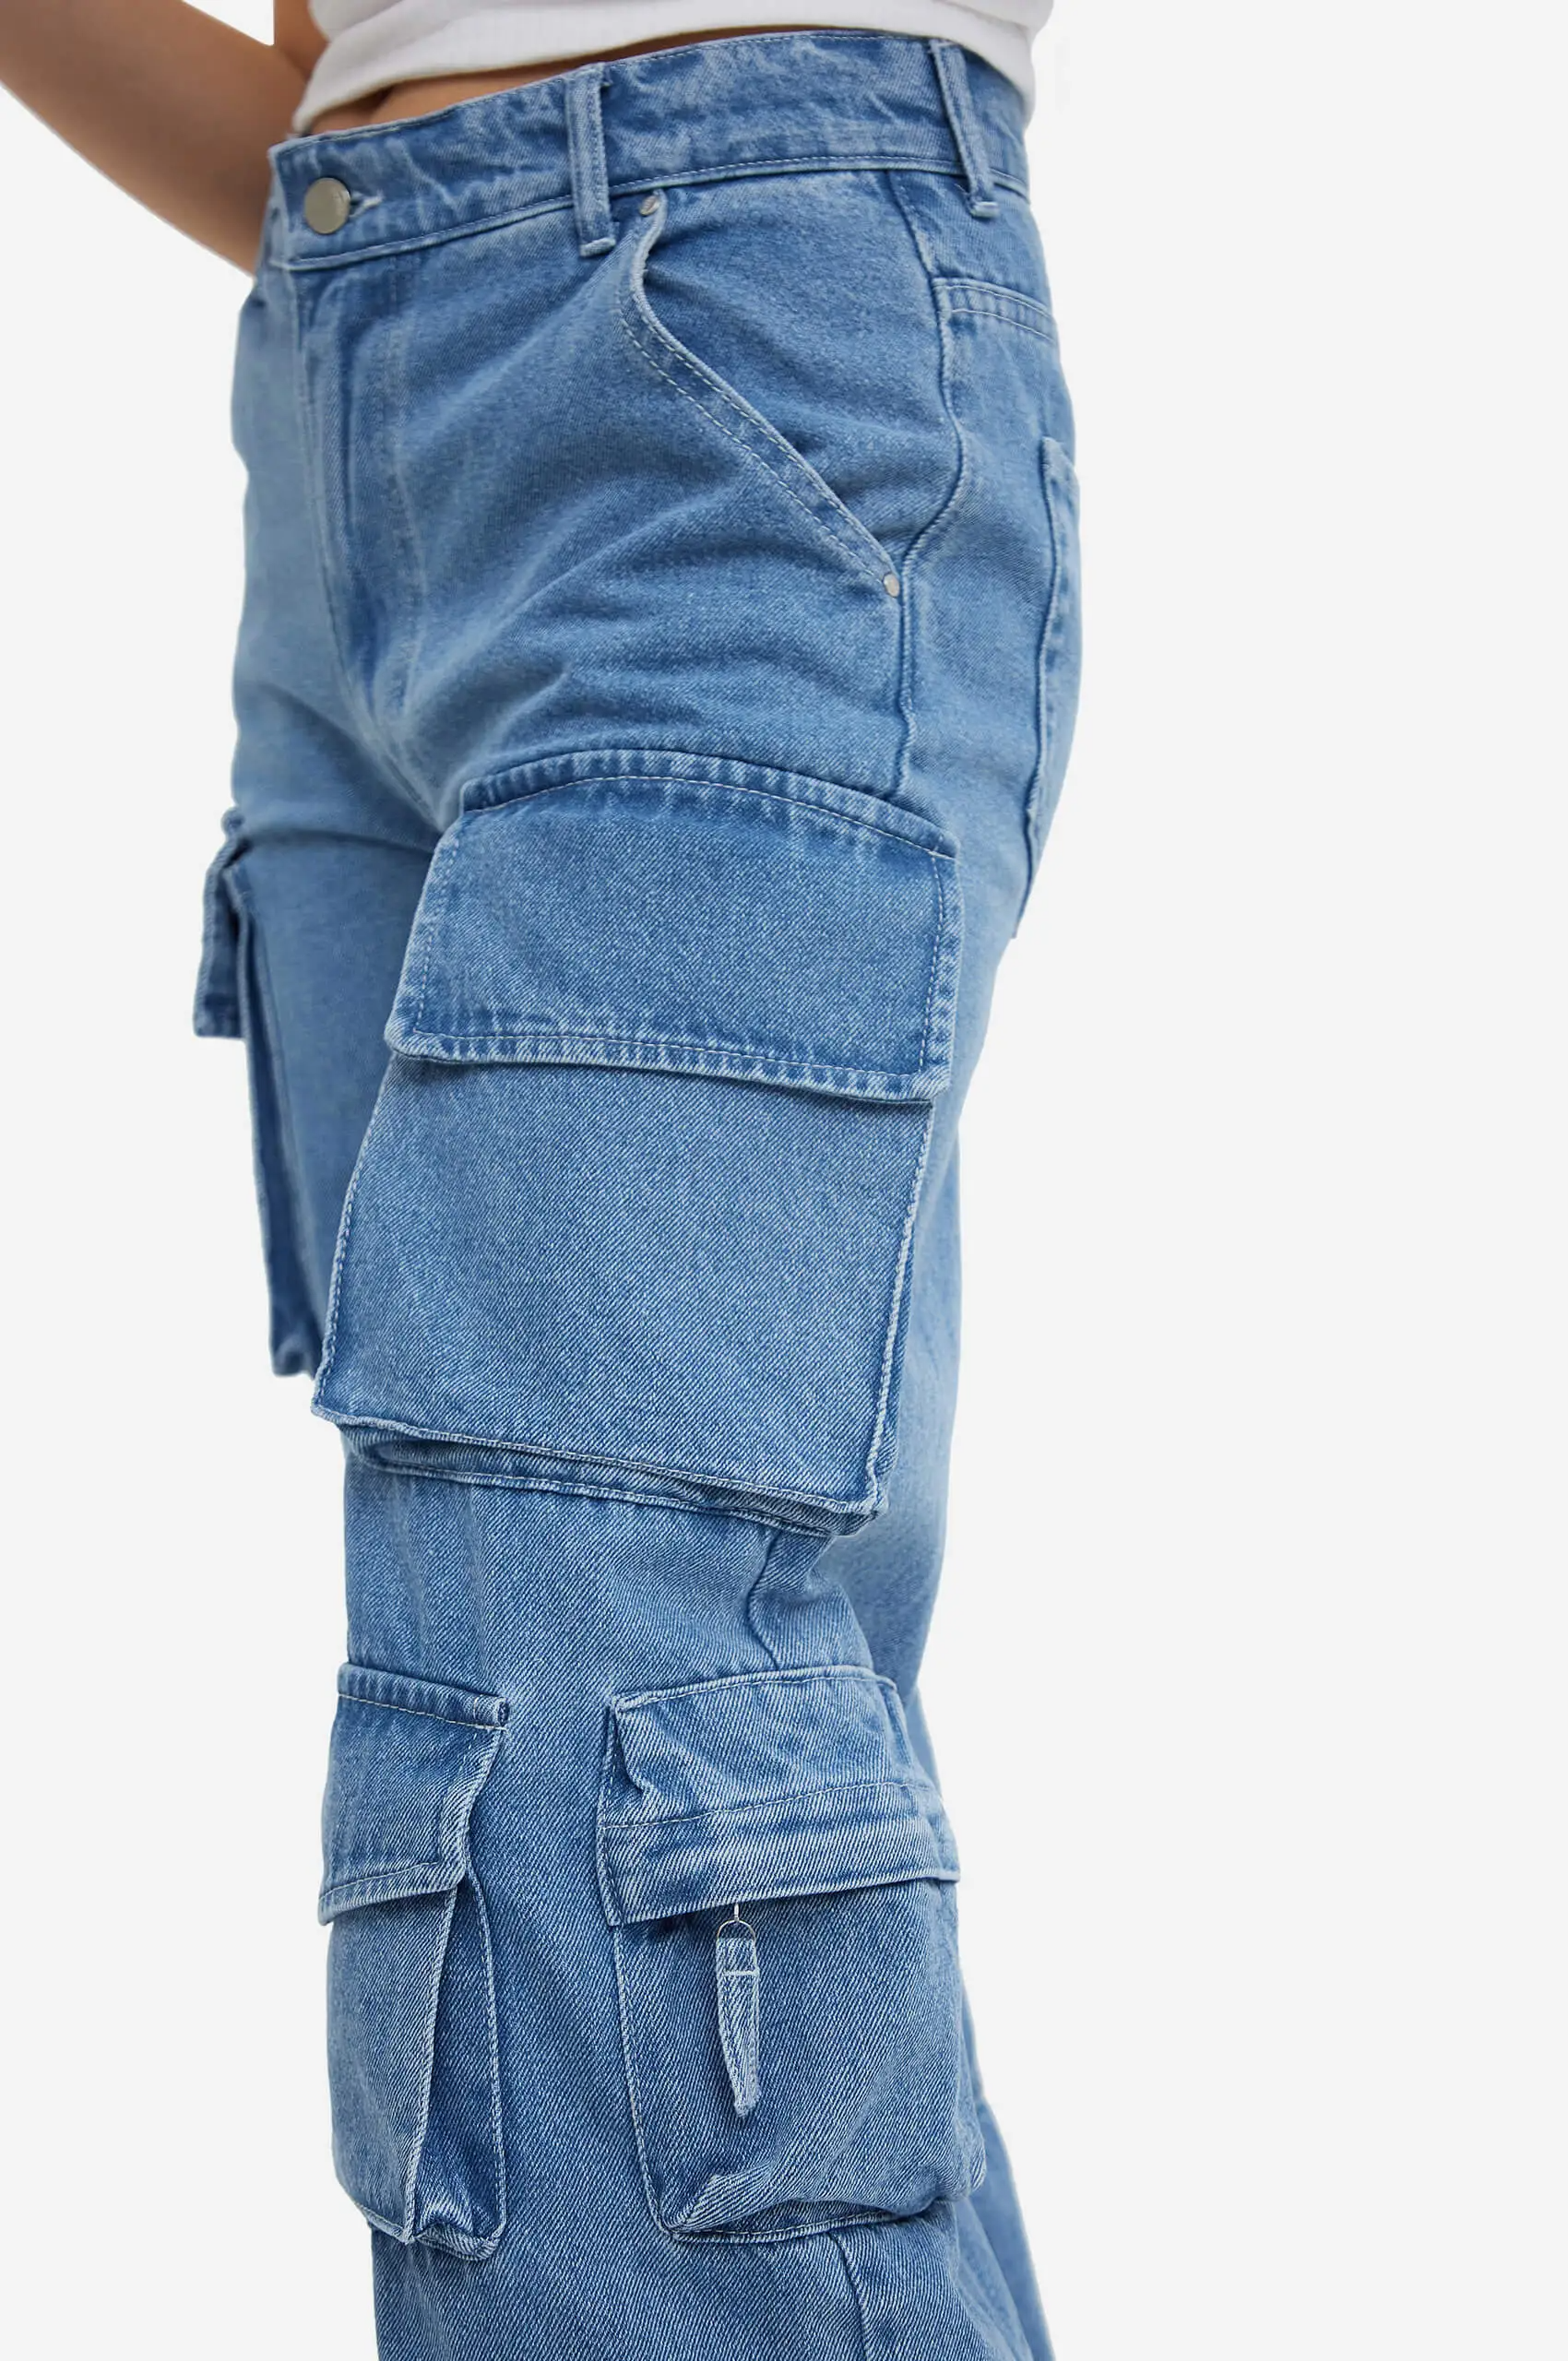 Light blue cargo jeans by Match Denim